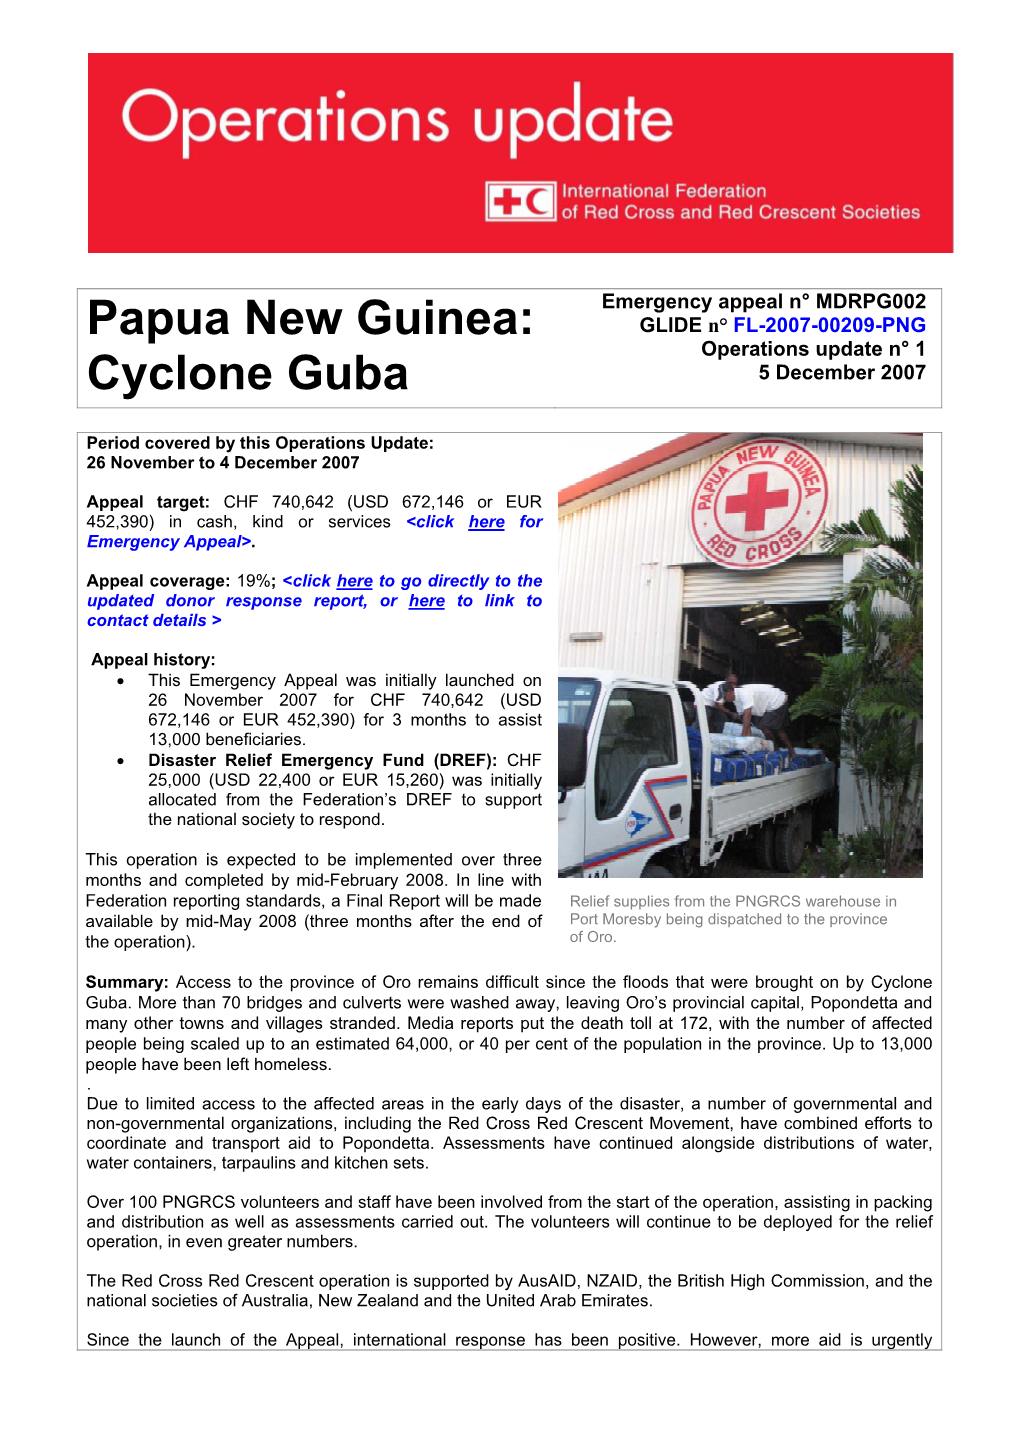 Papua New Guinea: Cyclone Guba; Operations Update No